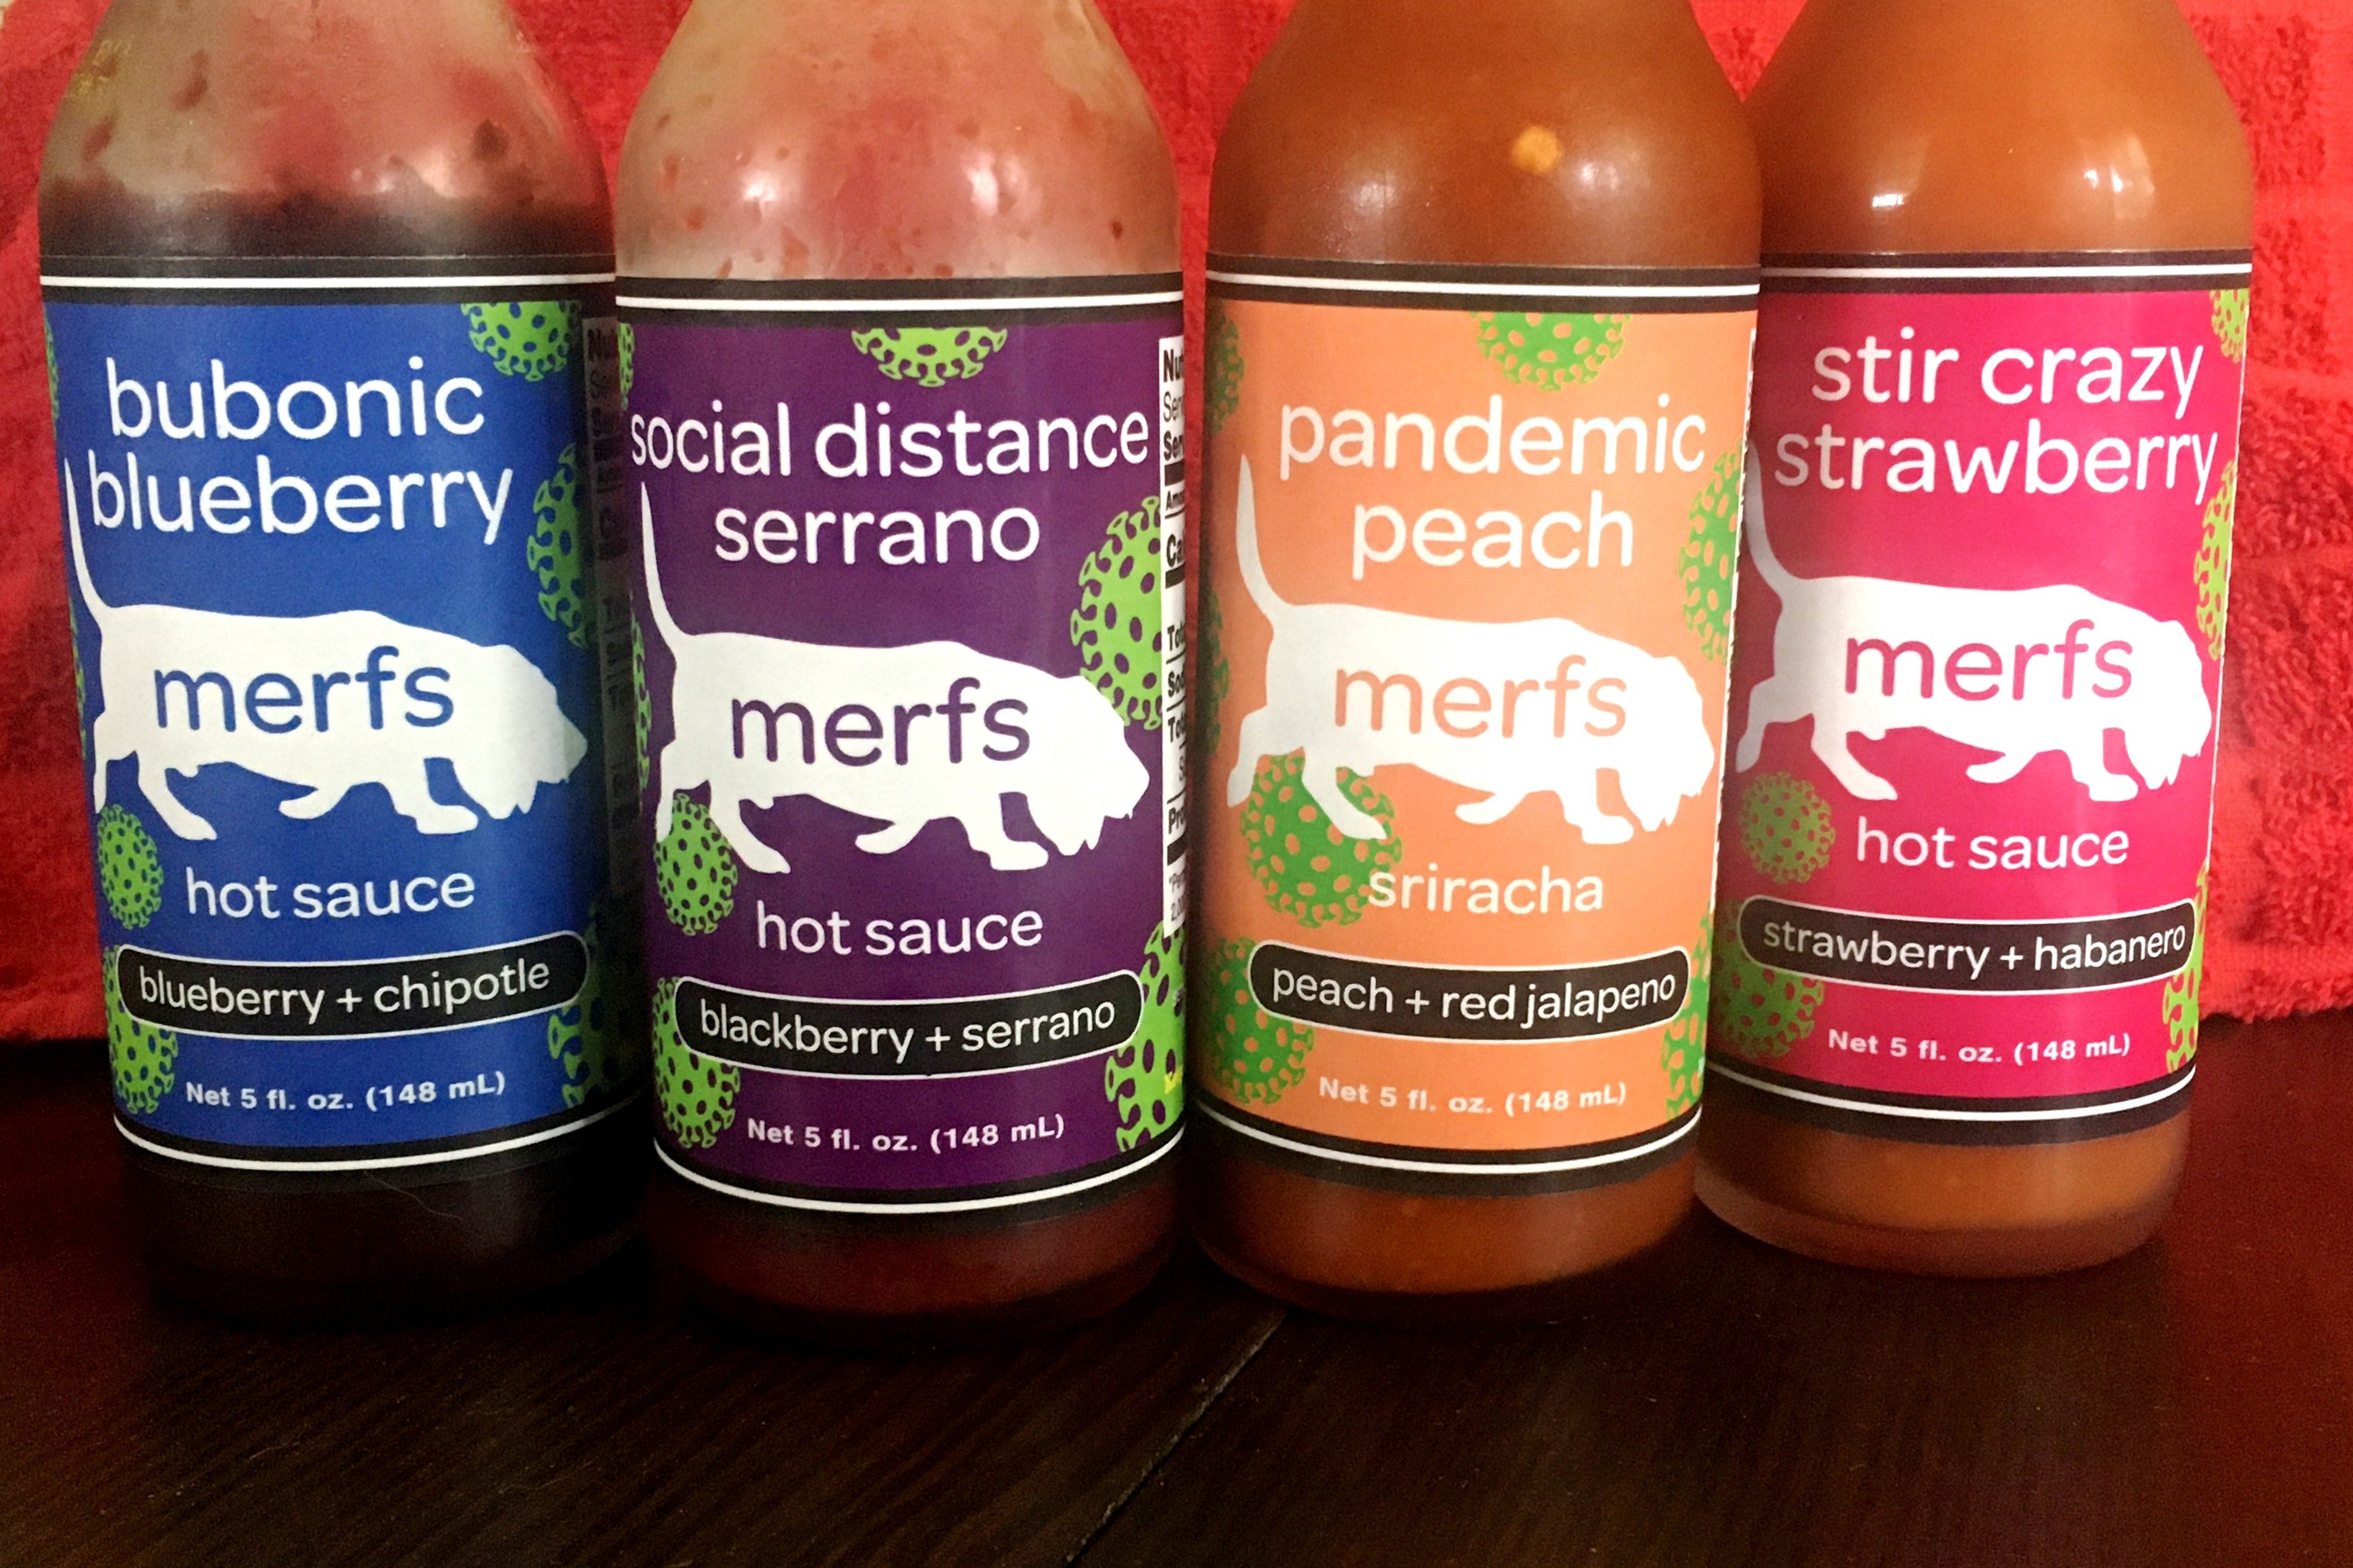 Colorado Hot Sauce Company Merfs Condiments Create Pandemic Series |  Westword